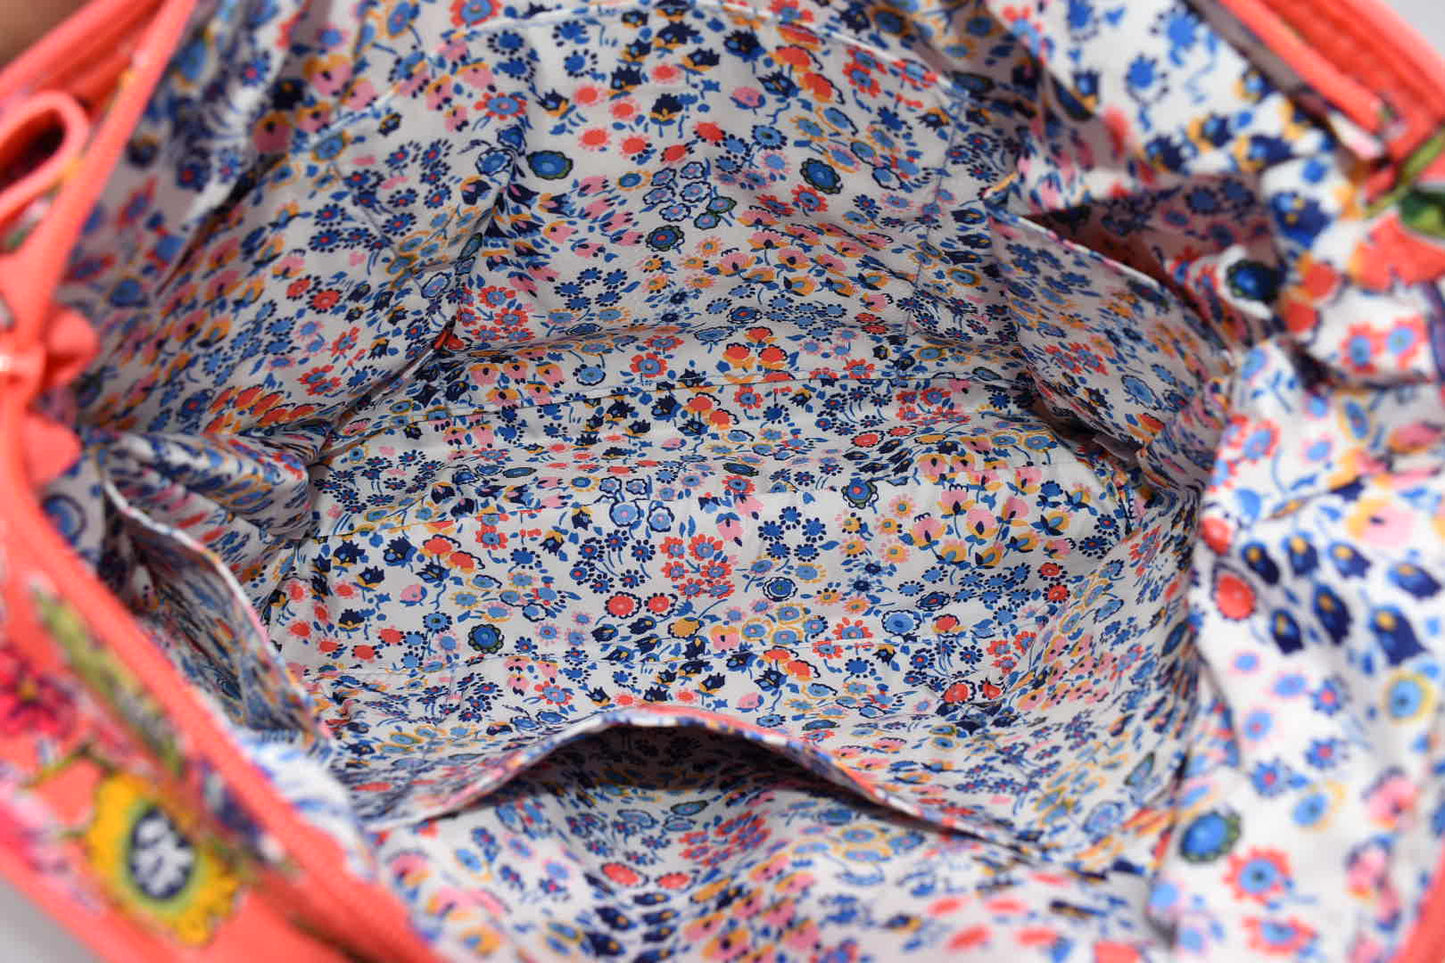 Vera Bradley Small Vera Tote Bag in "Coral Floral" Pattern